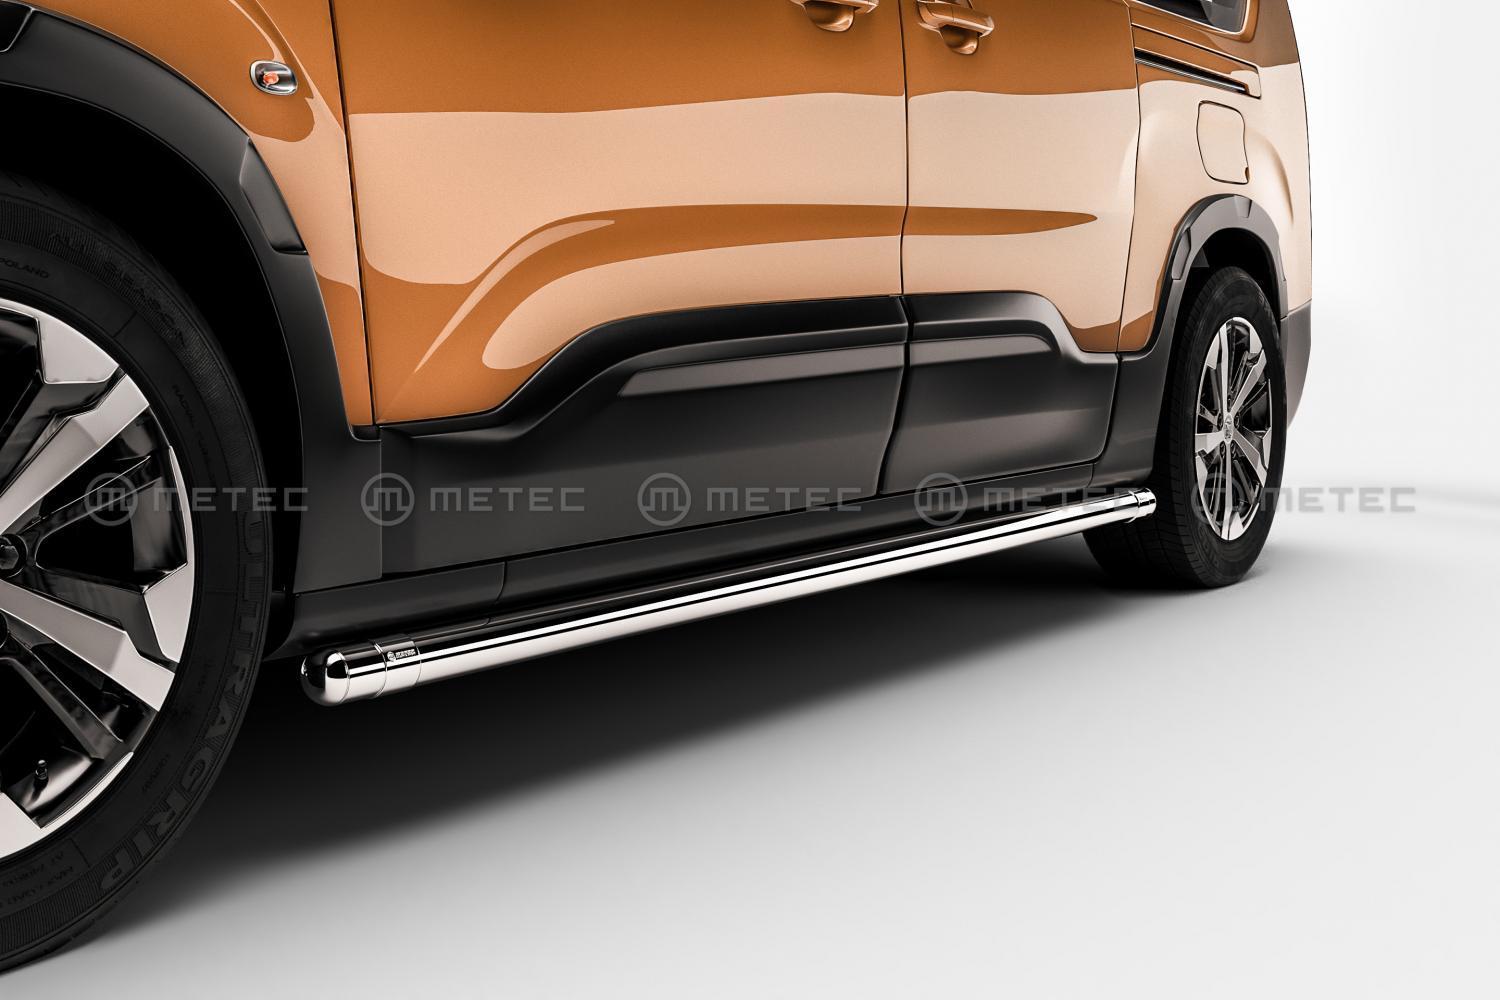 Peugeot Rifter Side bars (Metec)